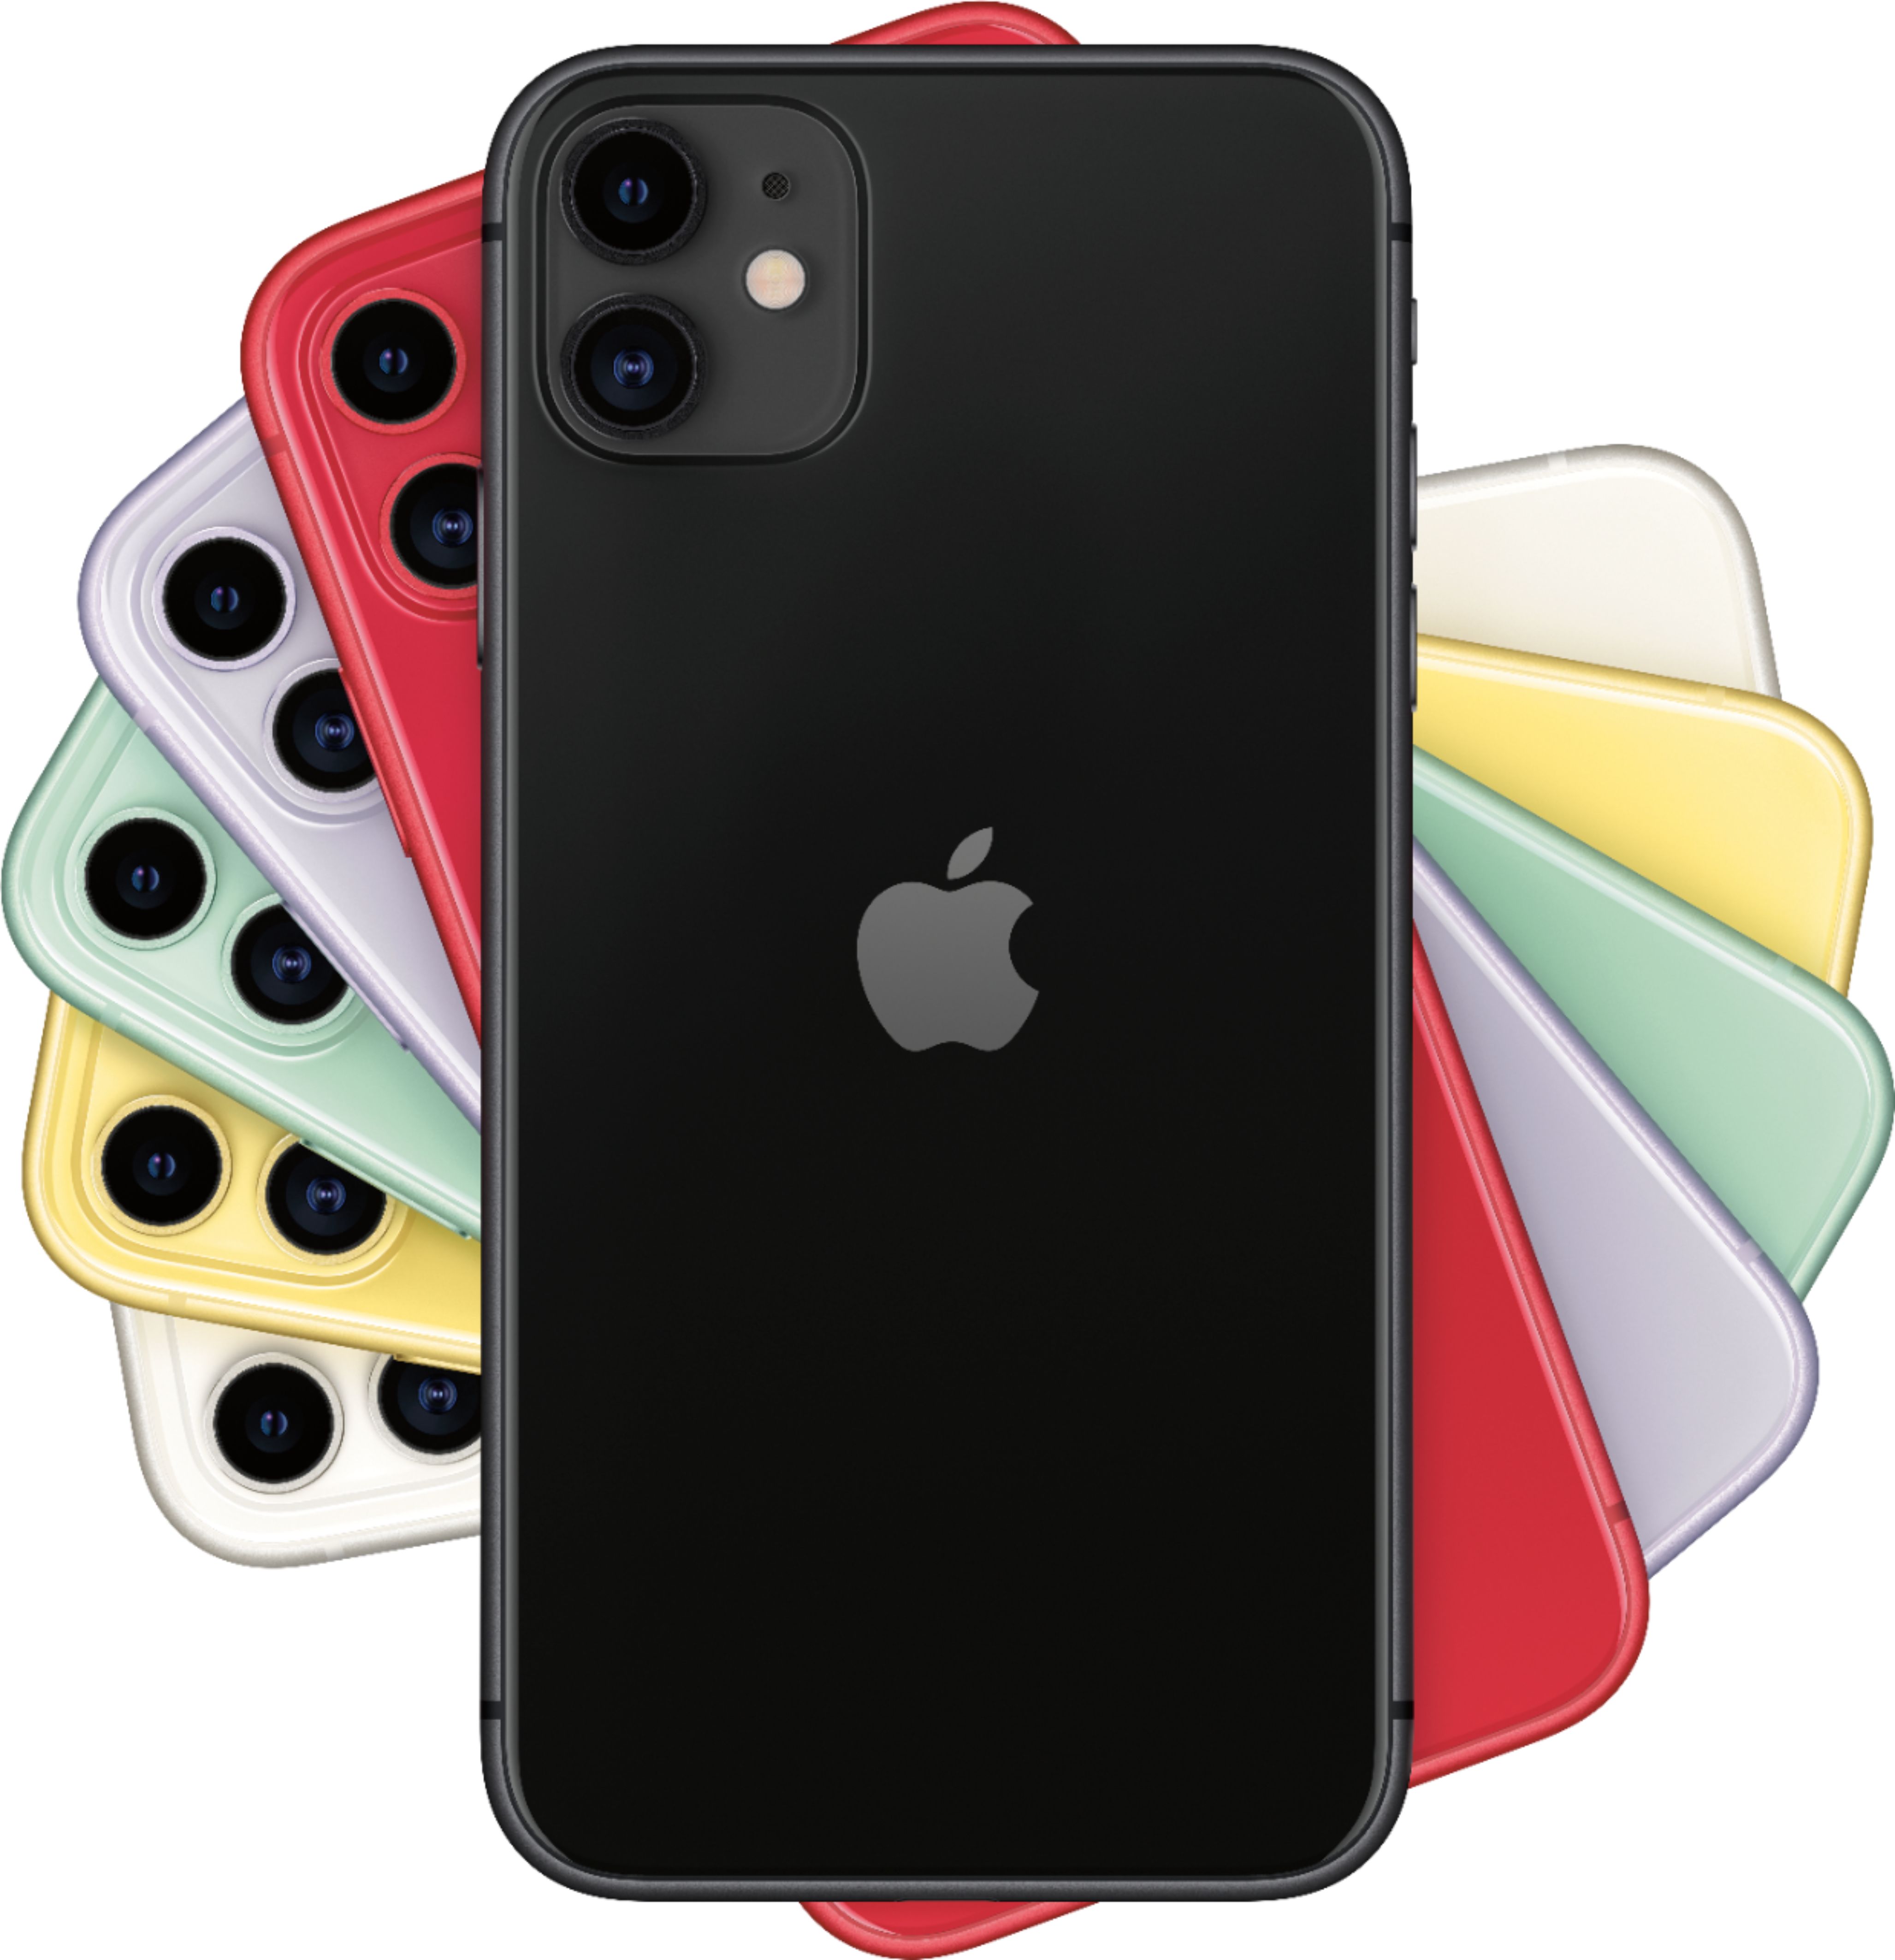 Apple iPhone 11 128GB Black (Sprint) MWLE2LL/A - Best Buy